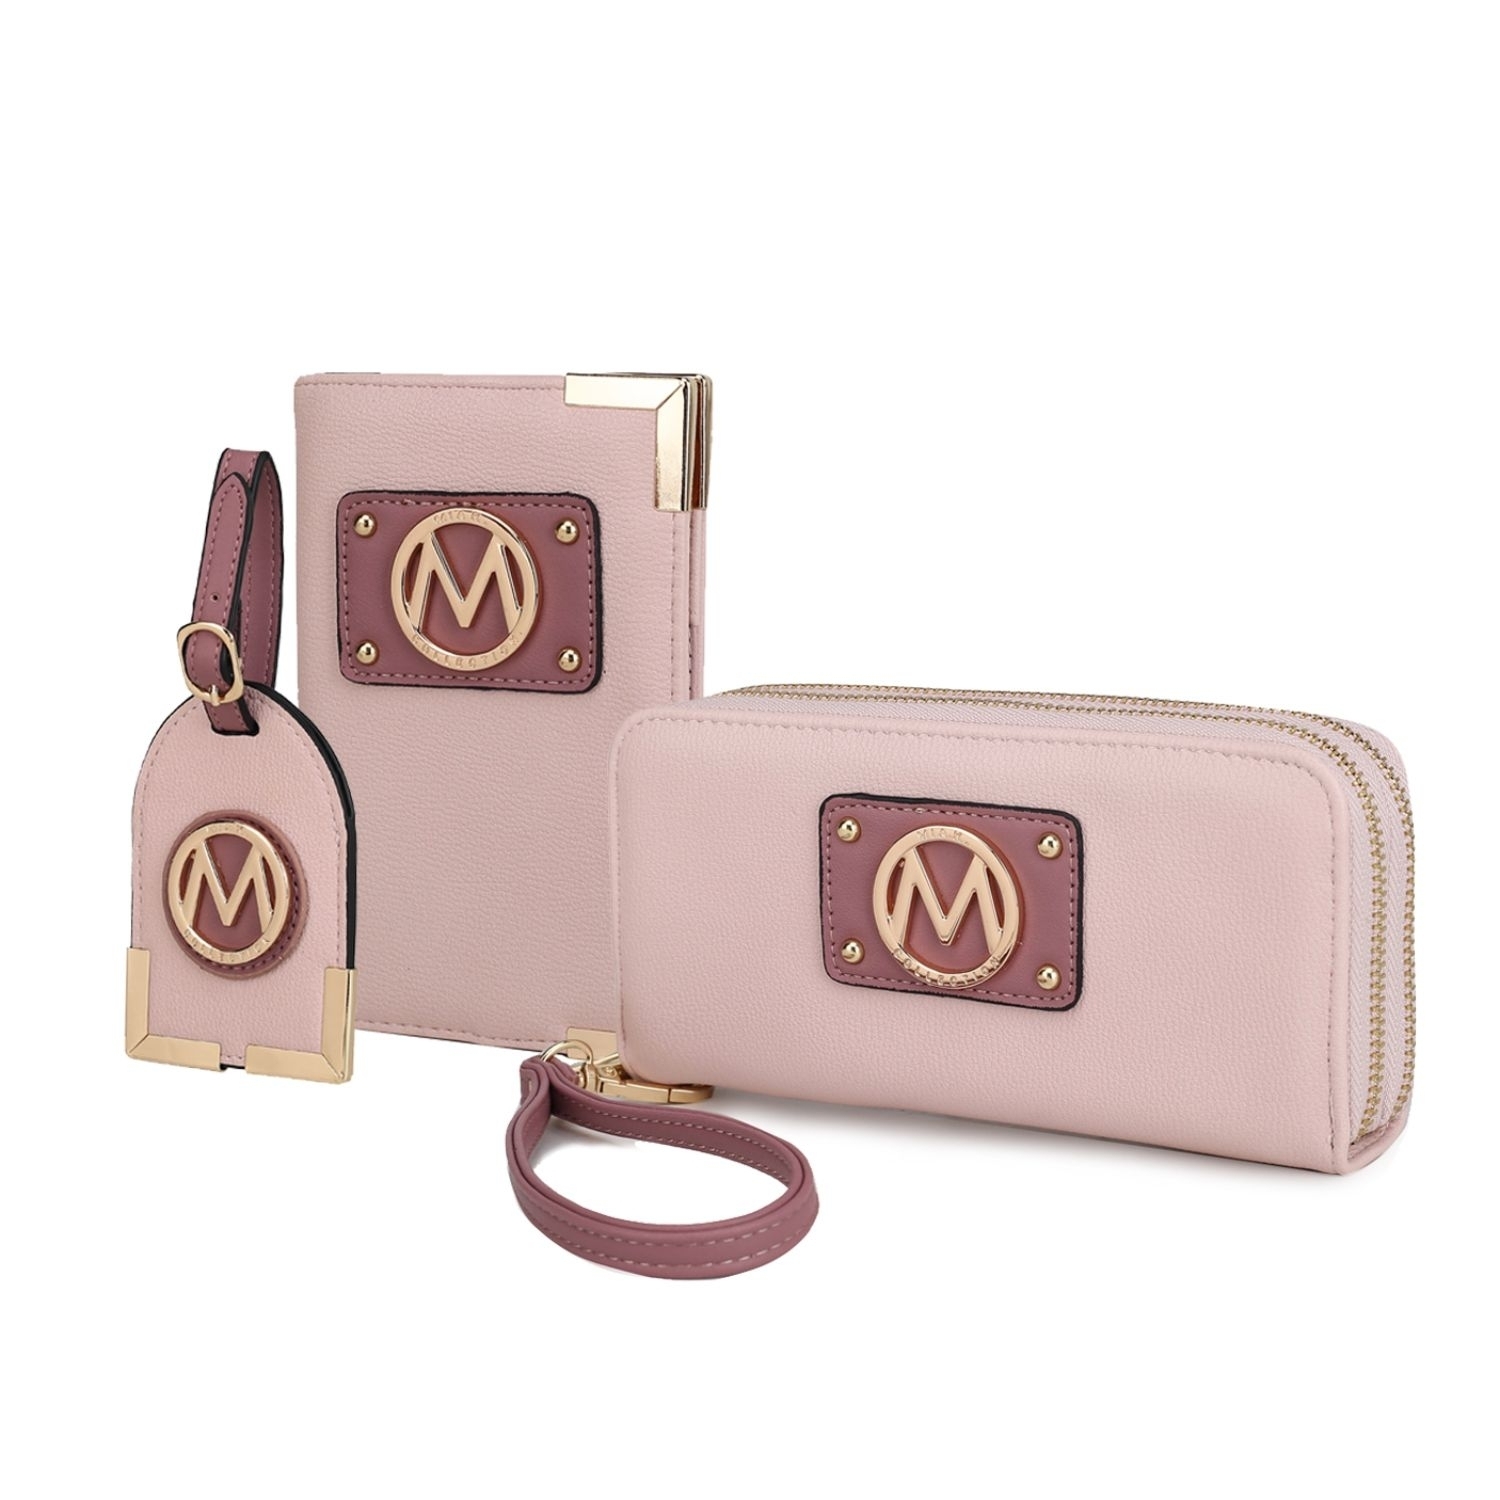 MKF Collection Darla Travel Gift Set Handbag By Mia K 3 Pieces - Navy